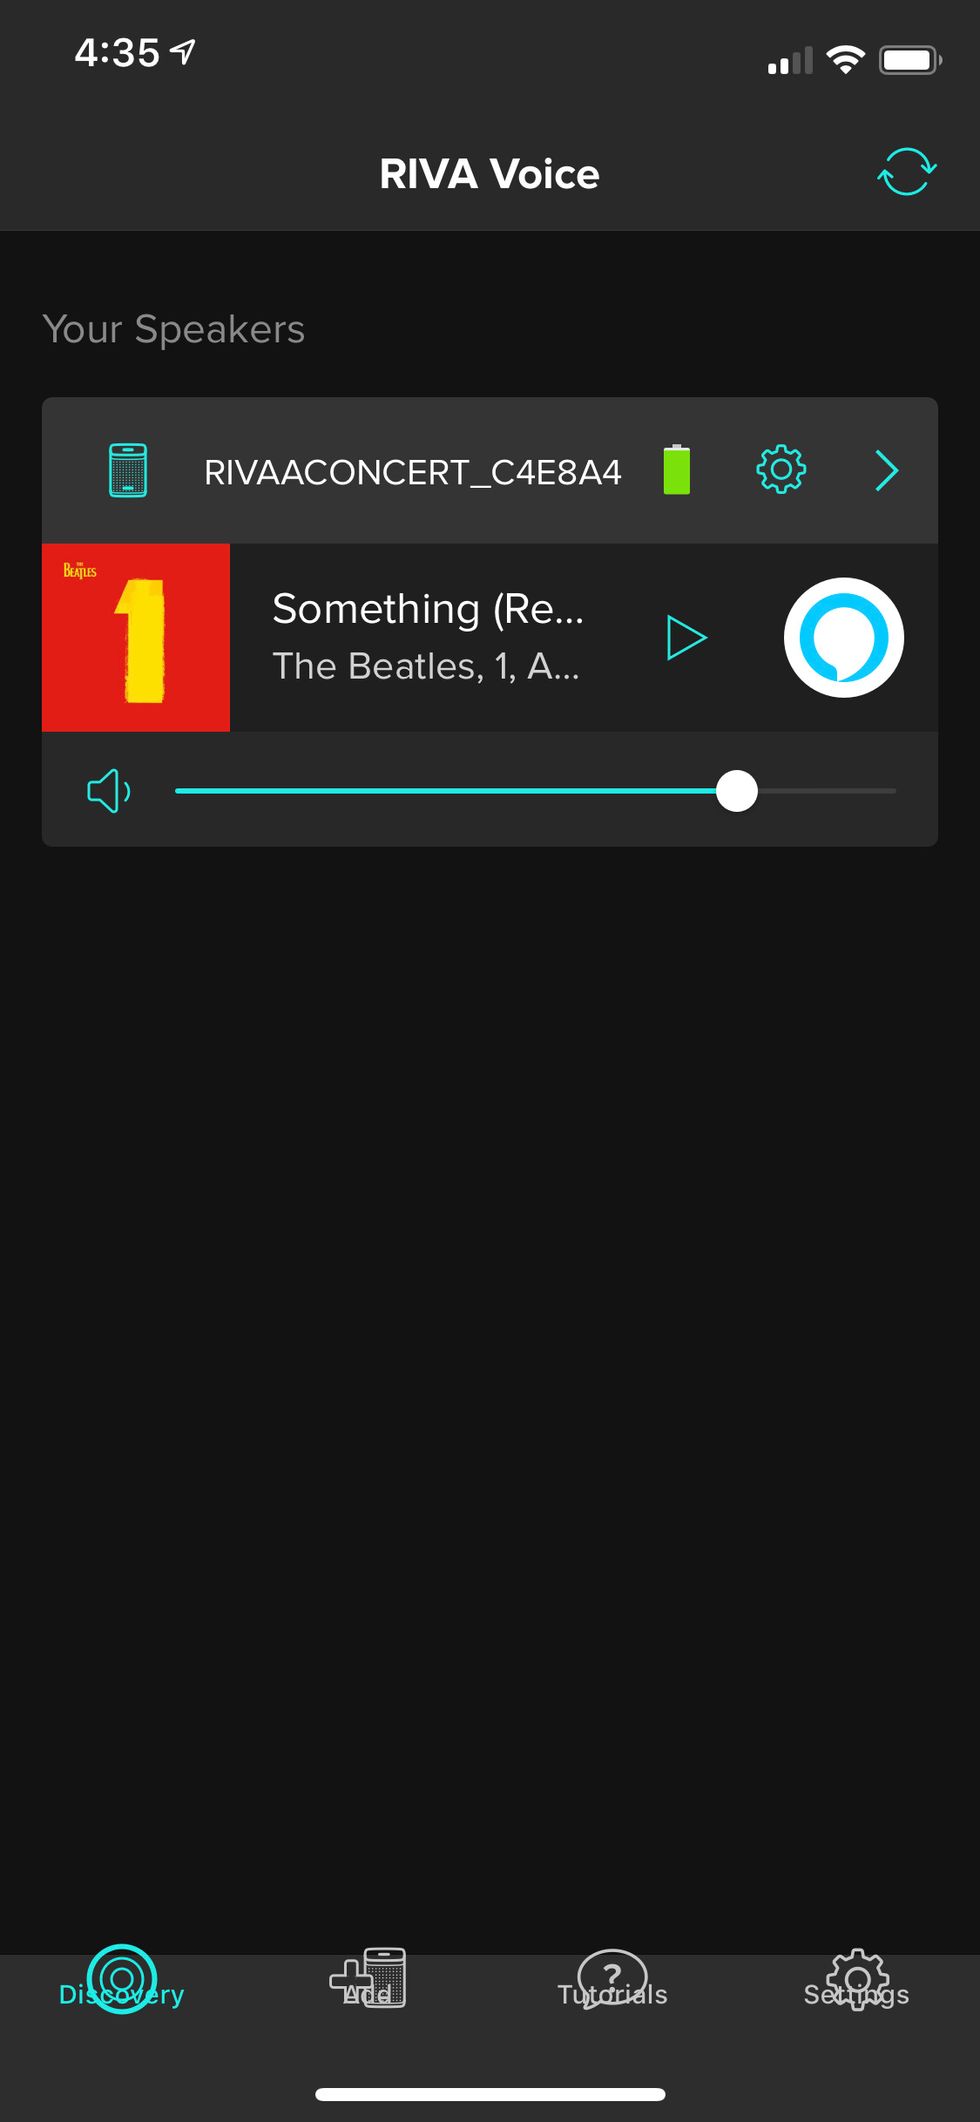 a screenshot of Riva voice app